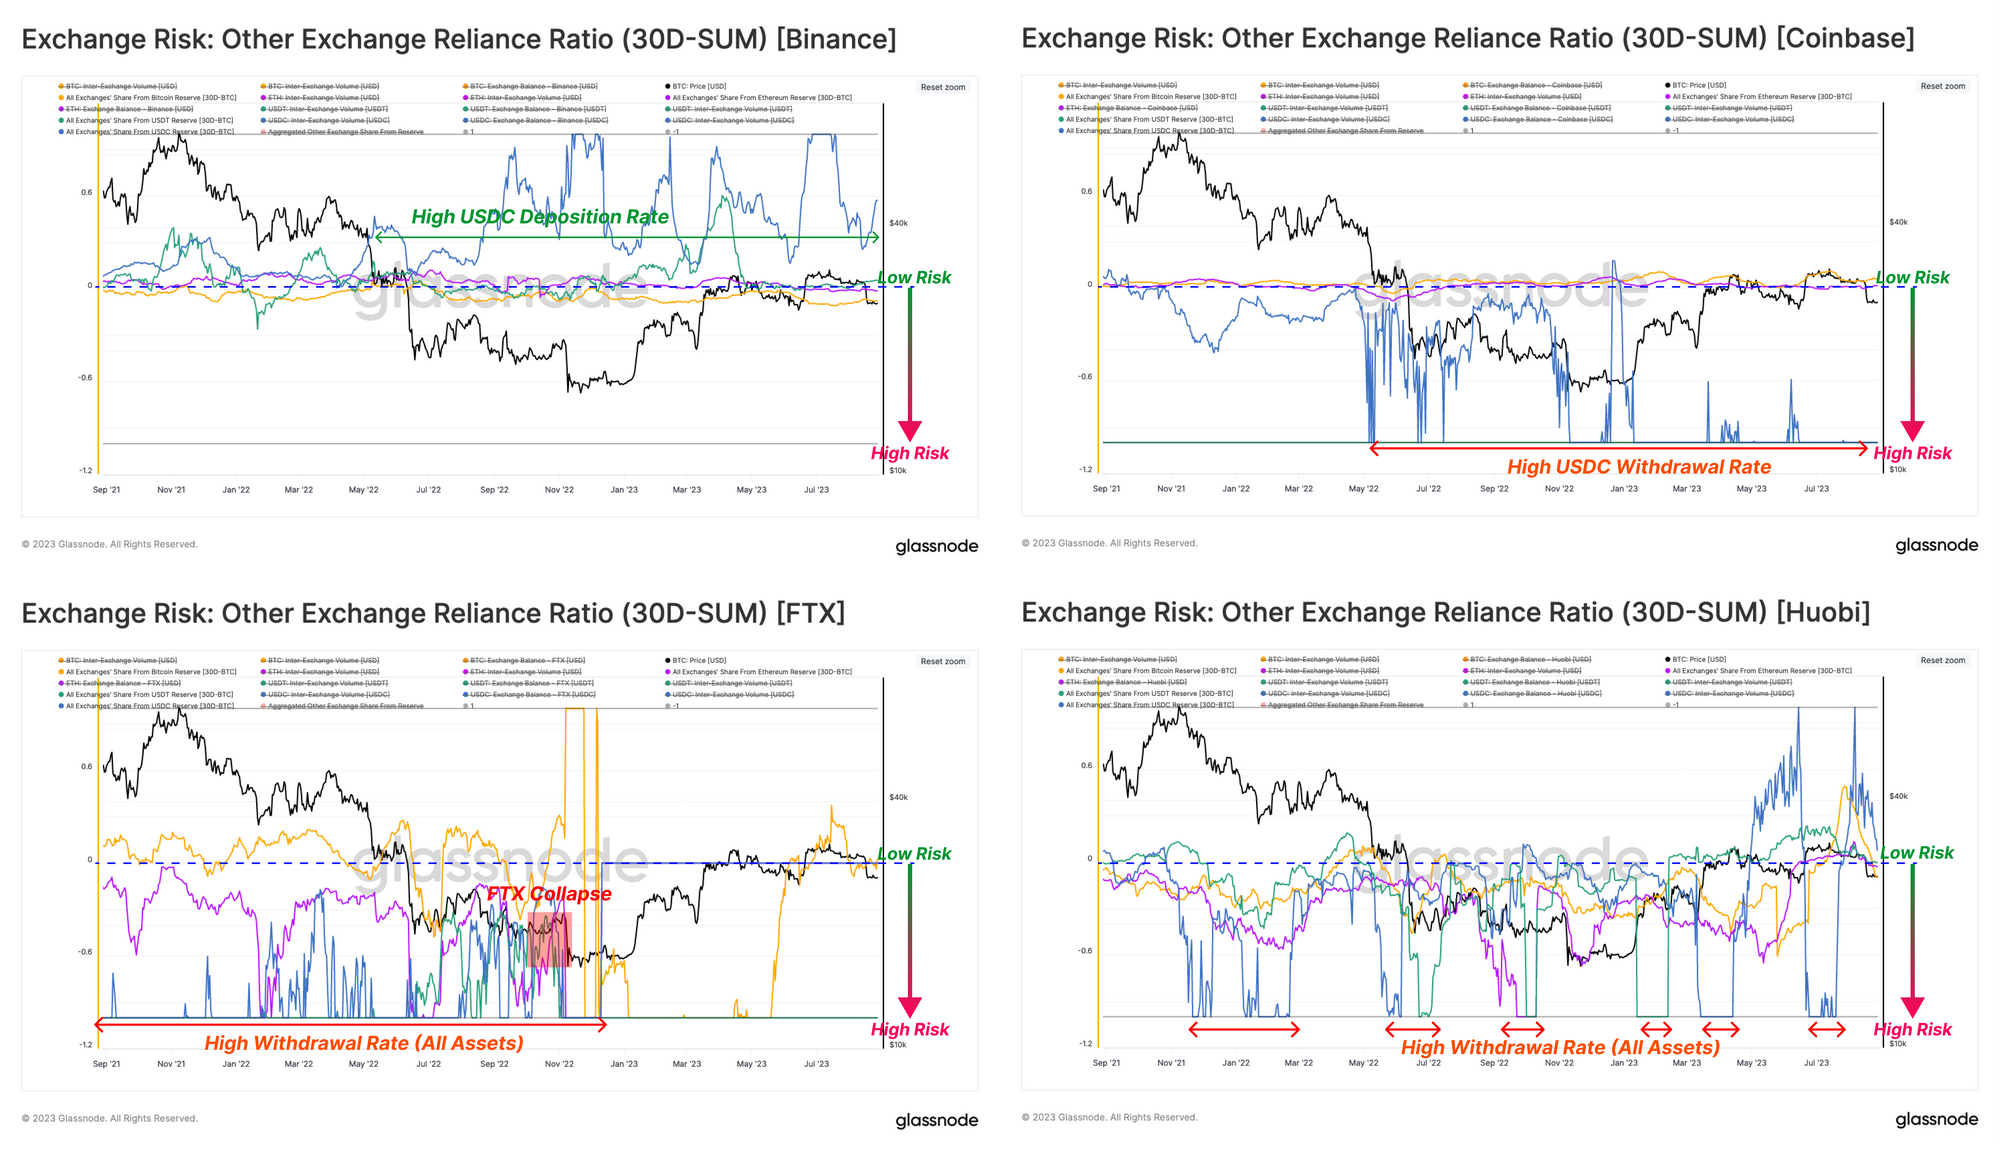 Evaluating Exchange Risk